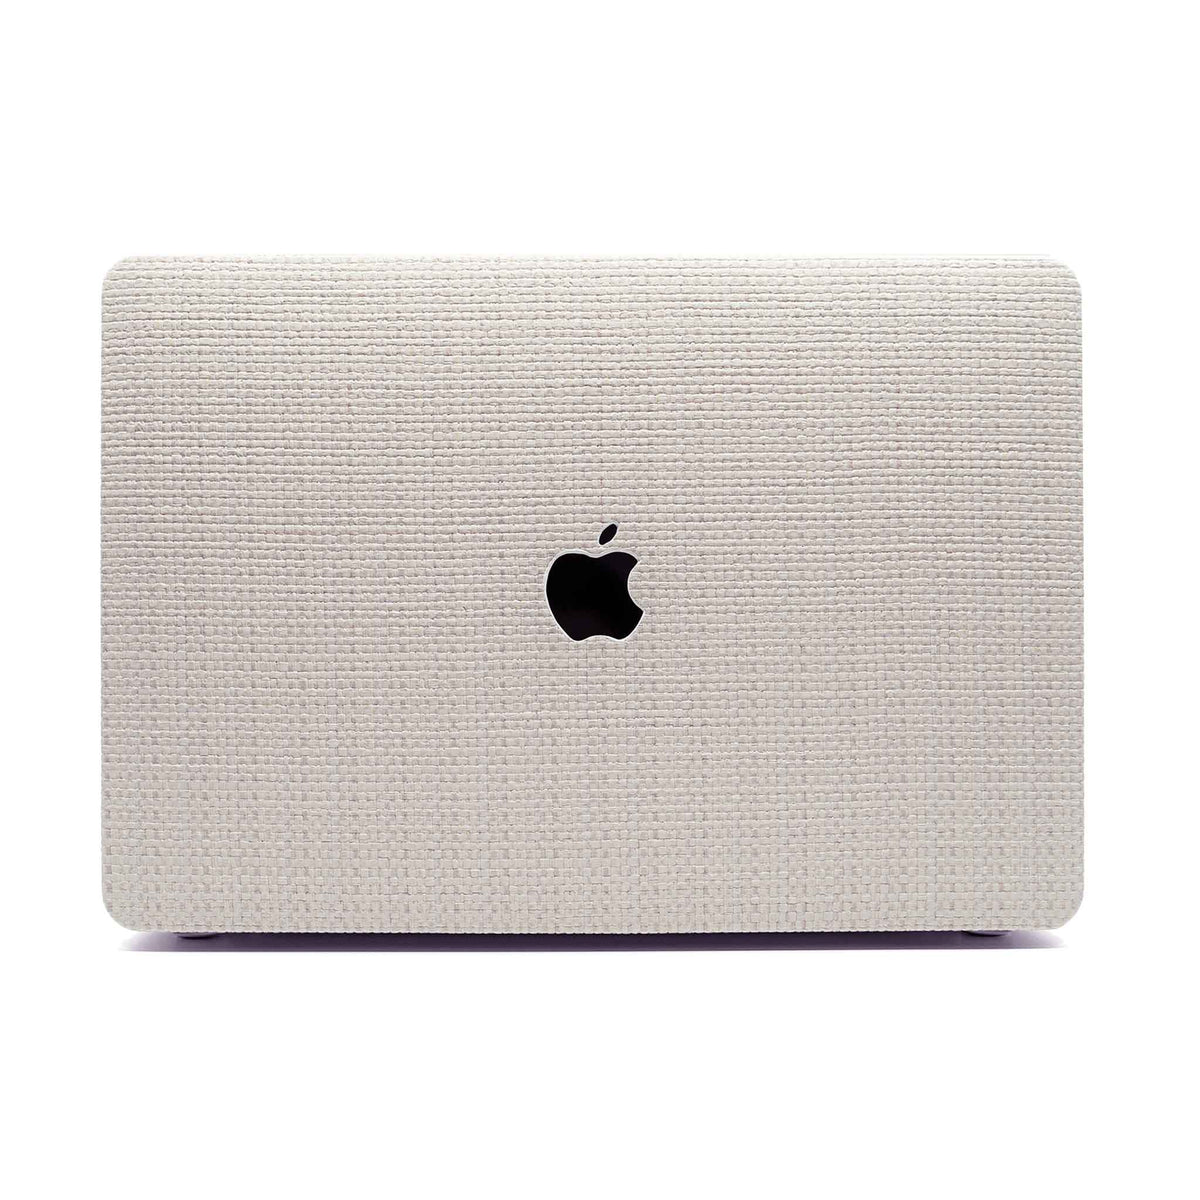 Woven MacBook Case | Uniqfind